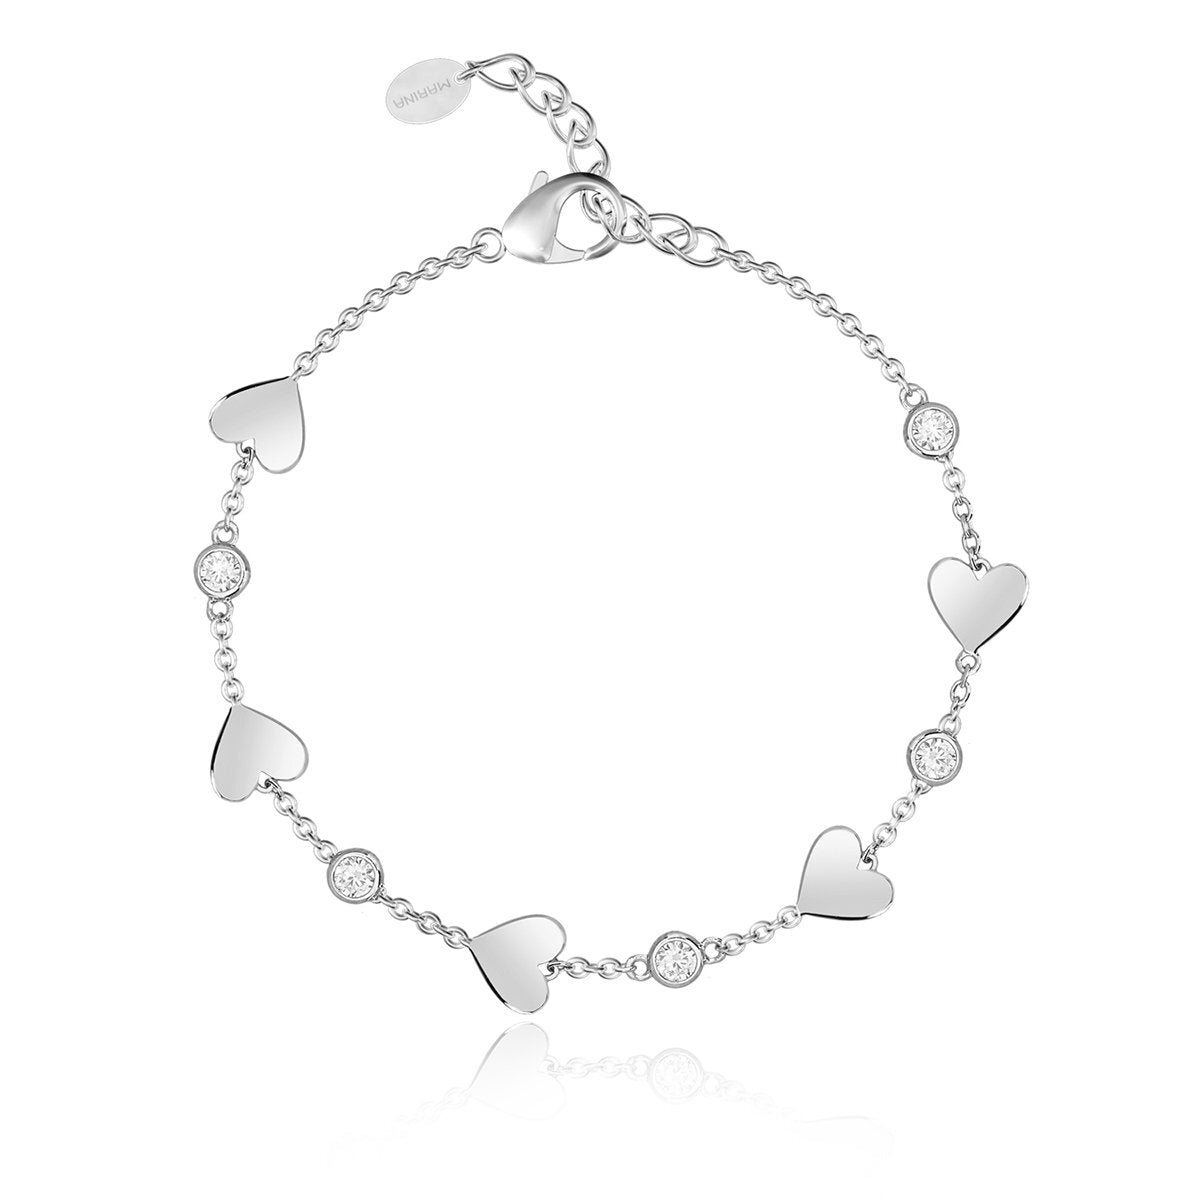 Mabina Silver Bracelet Hearts and Light Points 533239